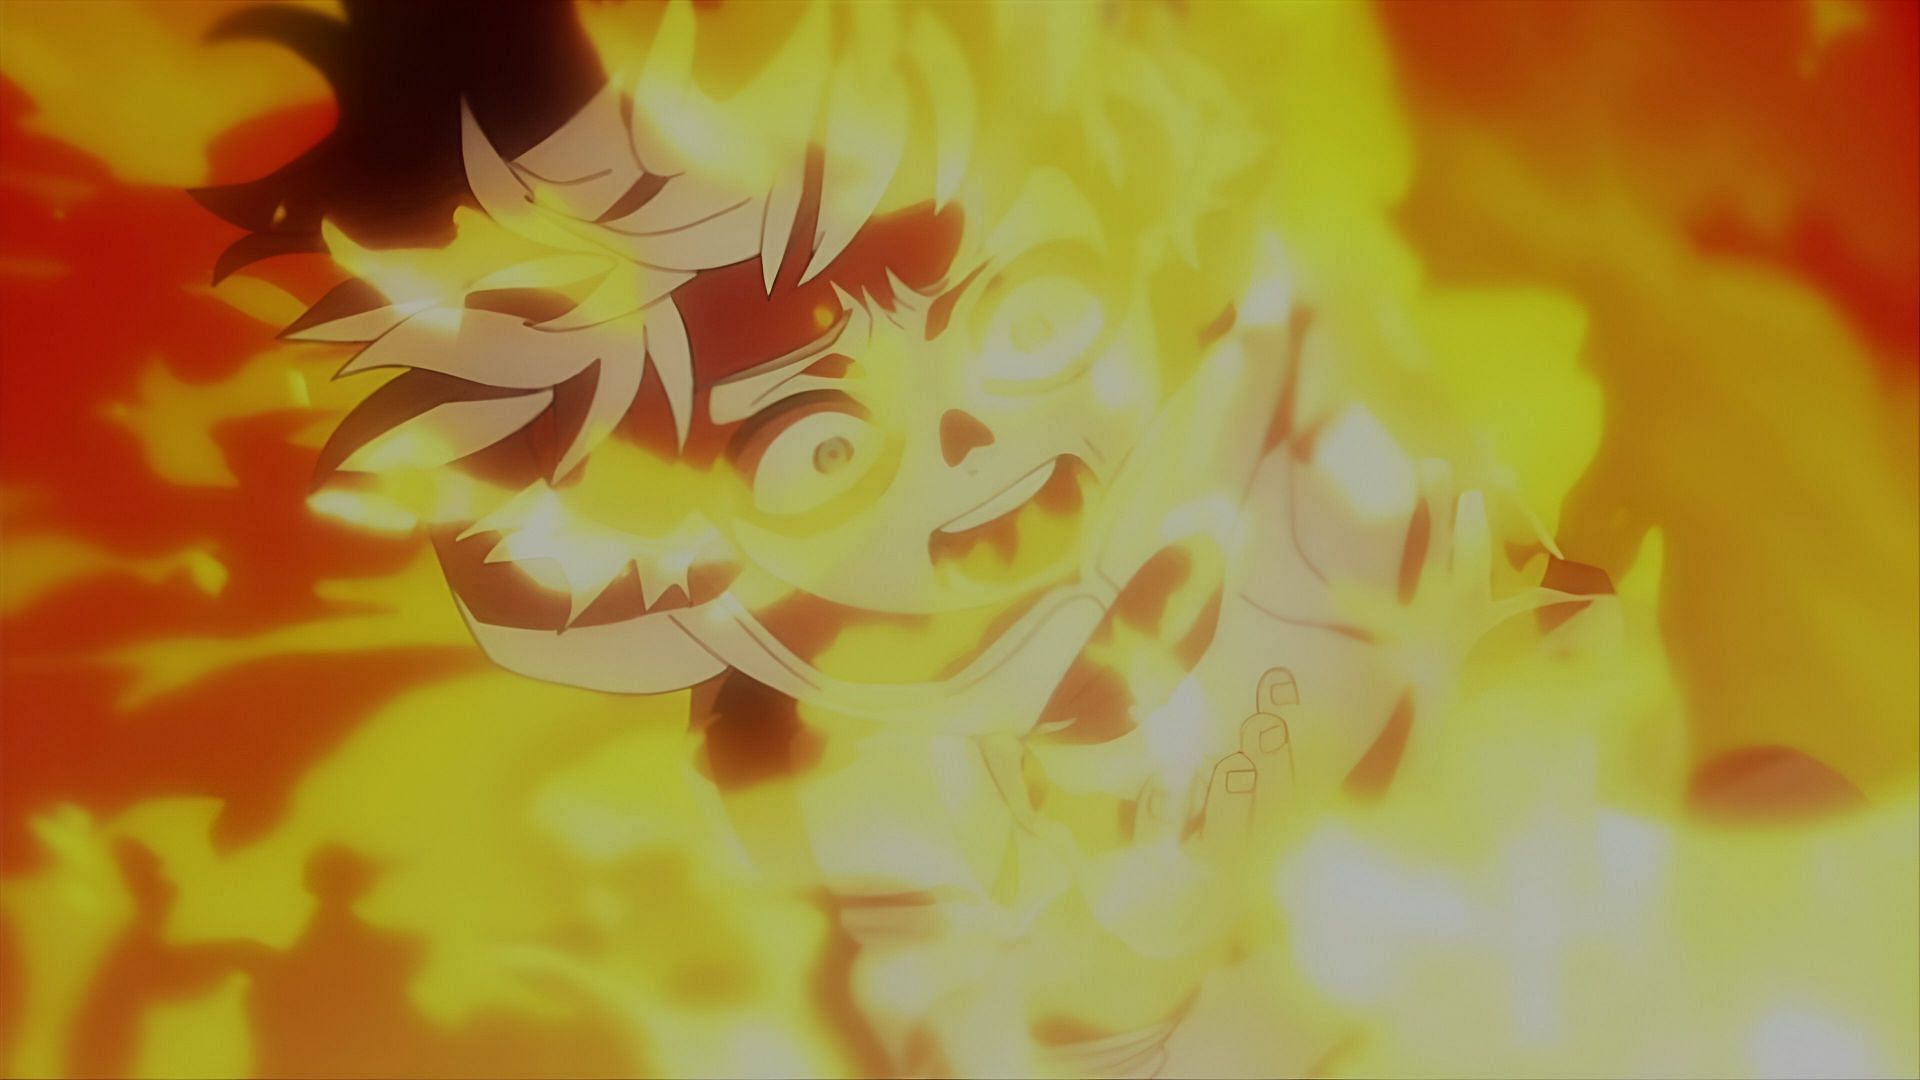 Toya dying by his own flames (Image via Bones)